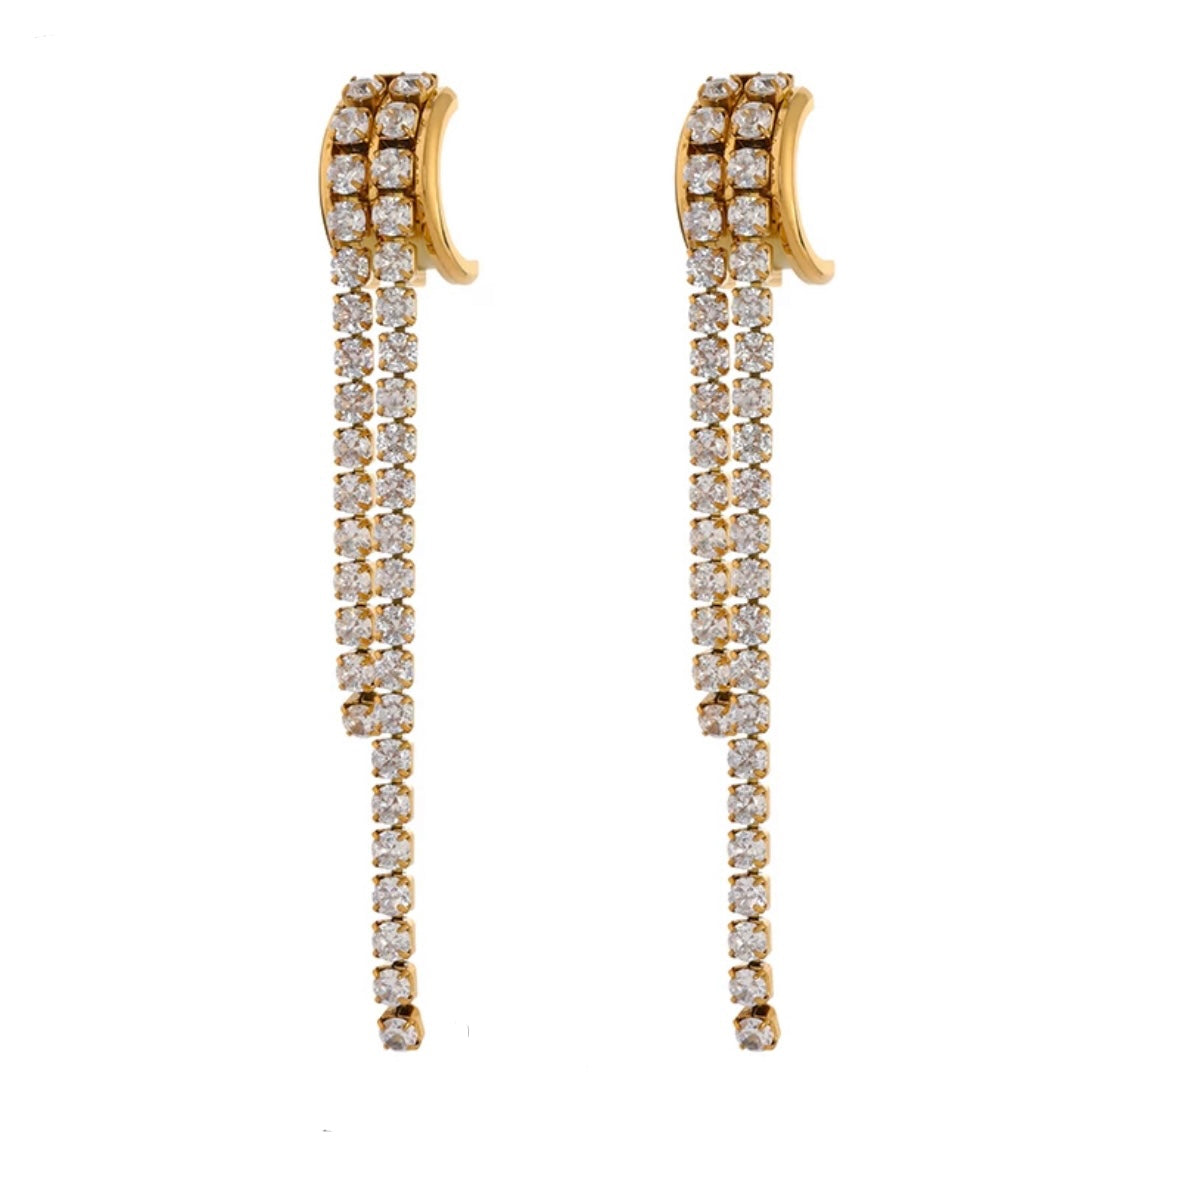 Yellow Gold 2 strand dangle and drop earrings for women, Sydney Australia